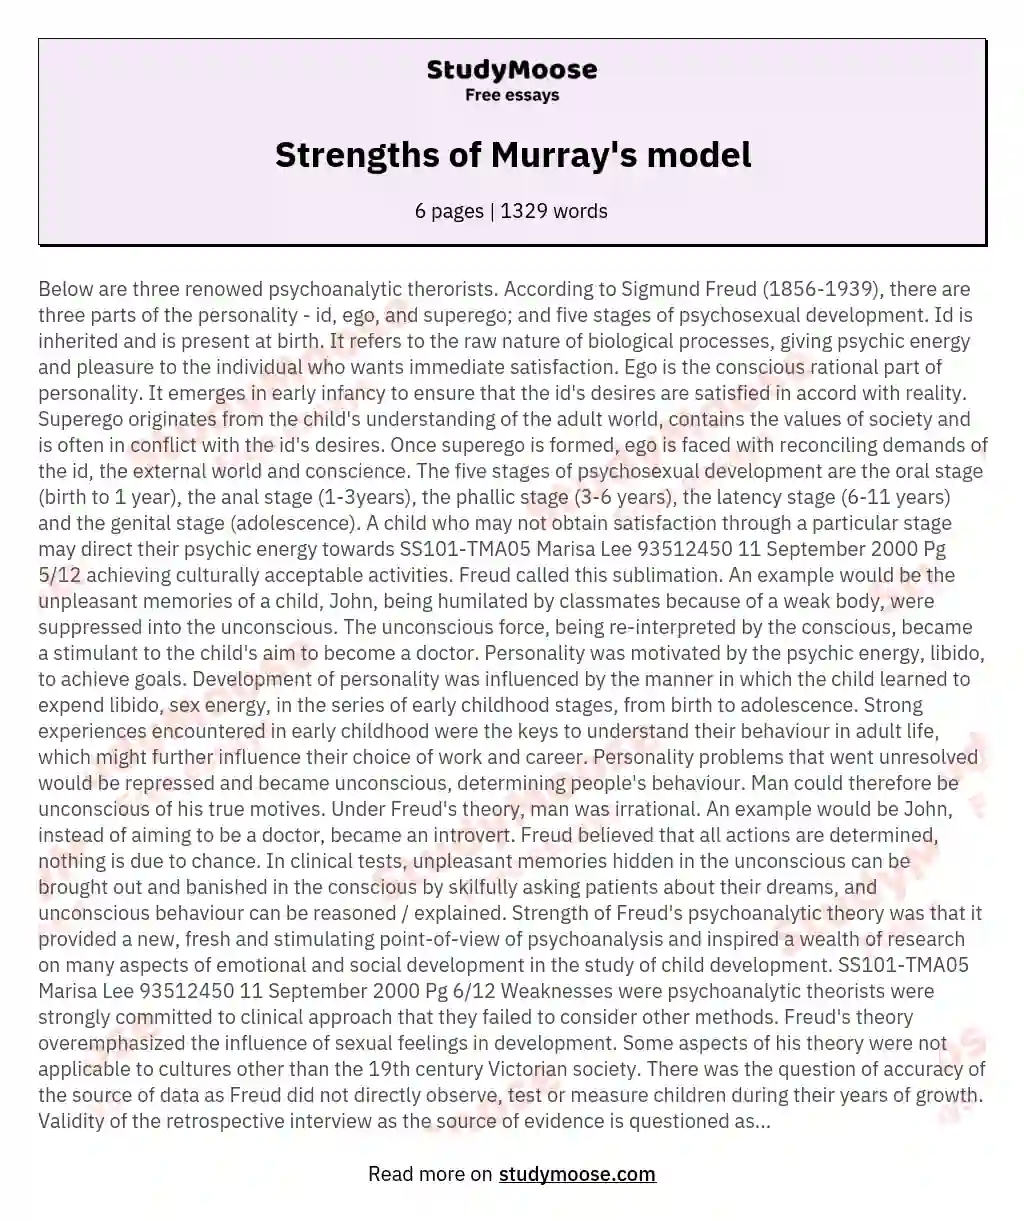 Strengths of Murray's model essay